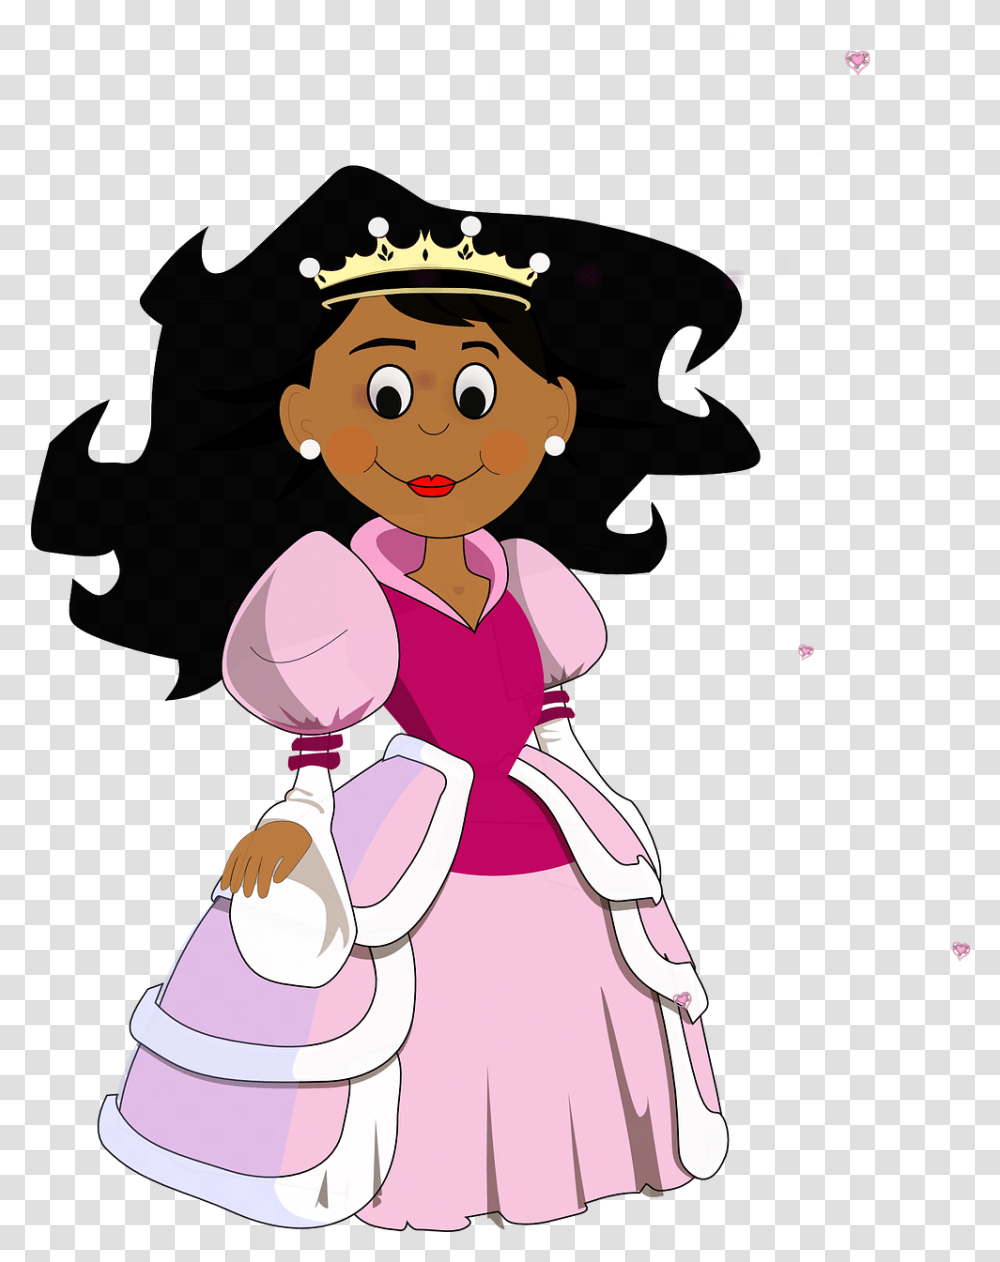 Princess Cute Cartoon Fairy Image Disney Princess Good Queen Clipart, Accessories, Female, Snowman, Crown Transparent Png